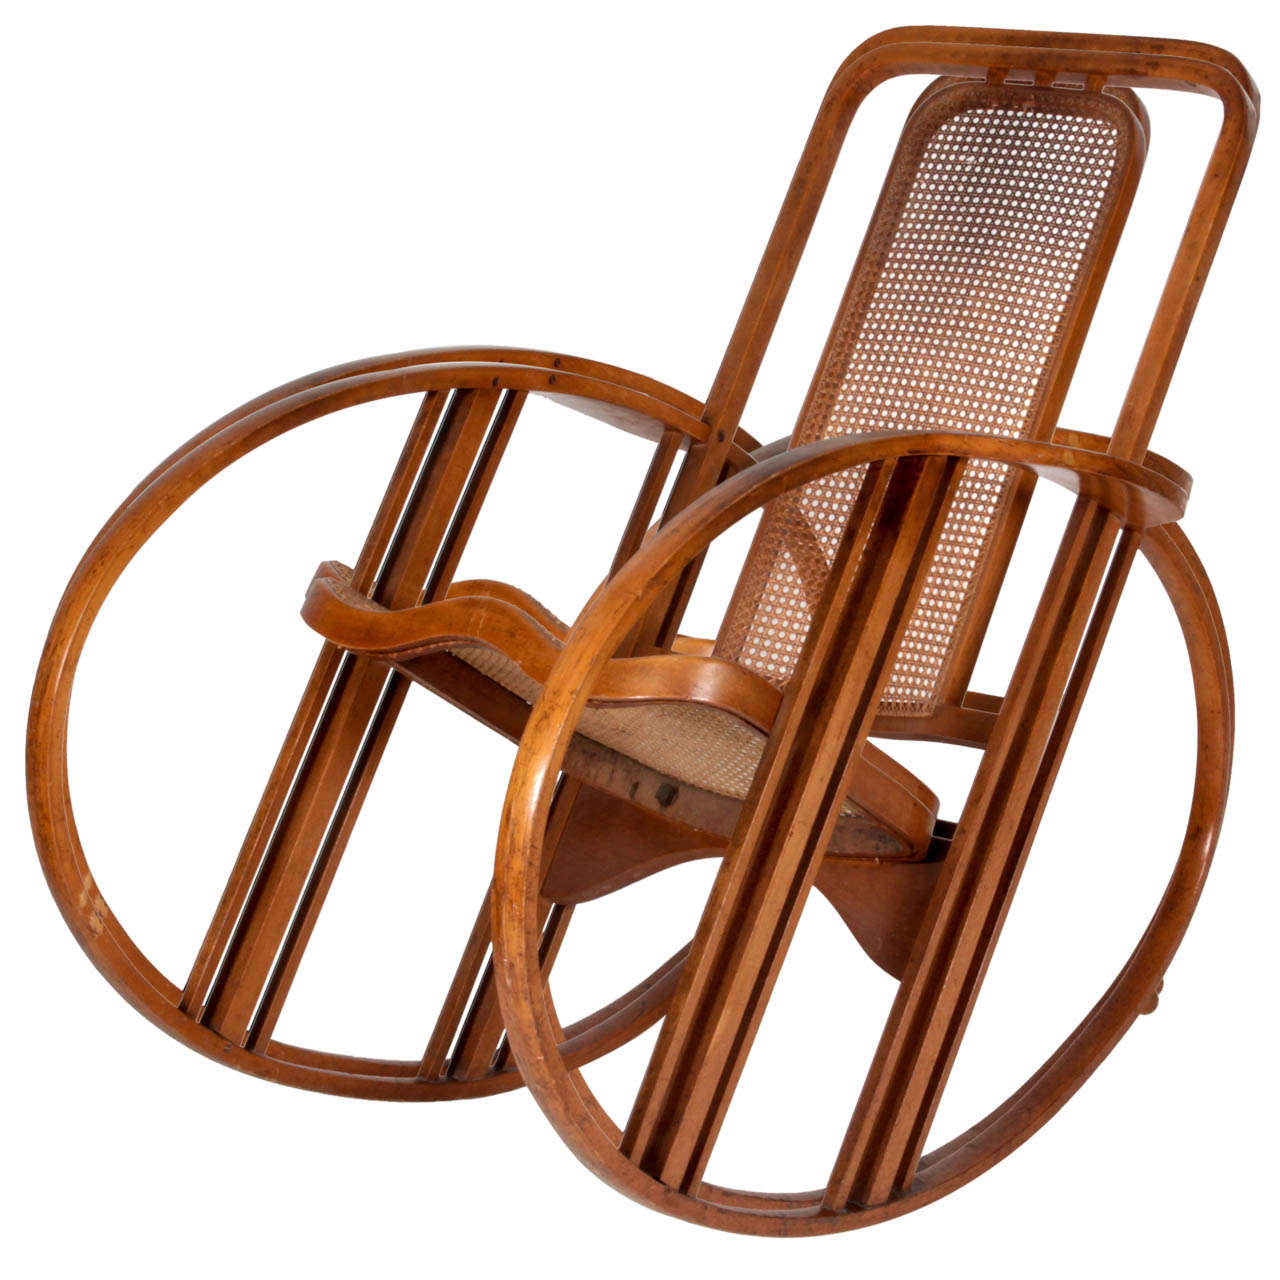 Antonio Volpe / Josef Hoffmann (attr.) "Egg" rocking chair c. 1920 For Sale